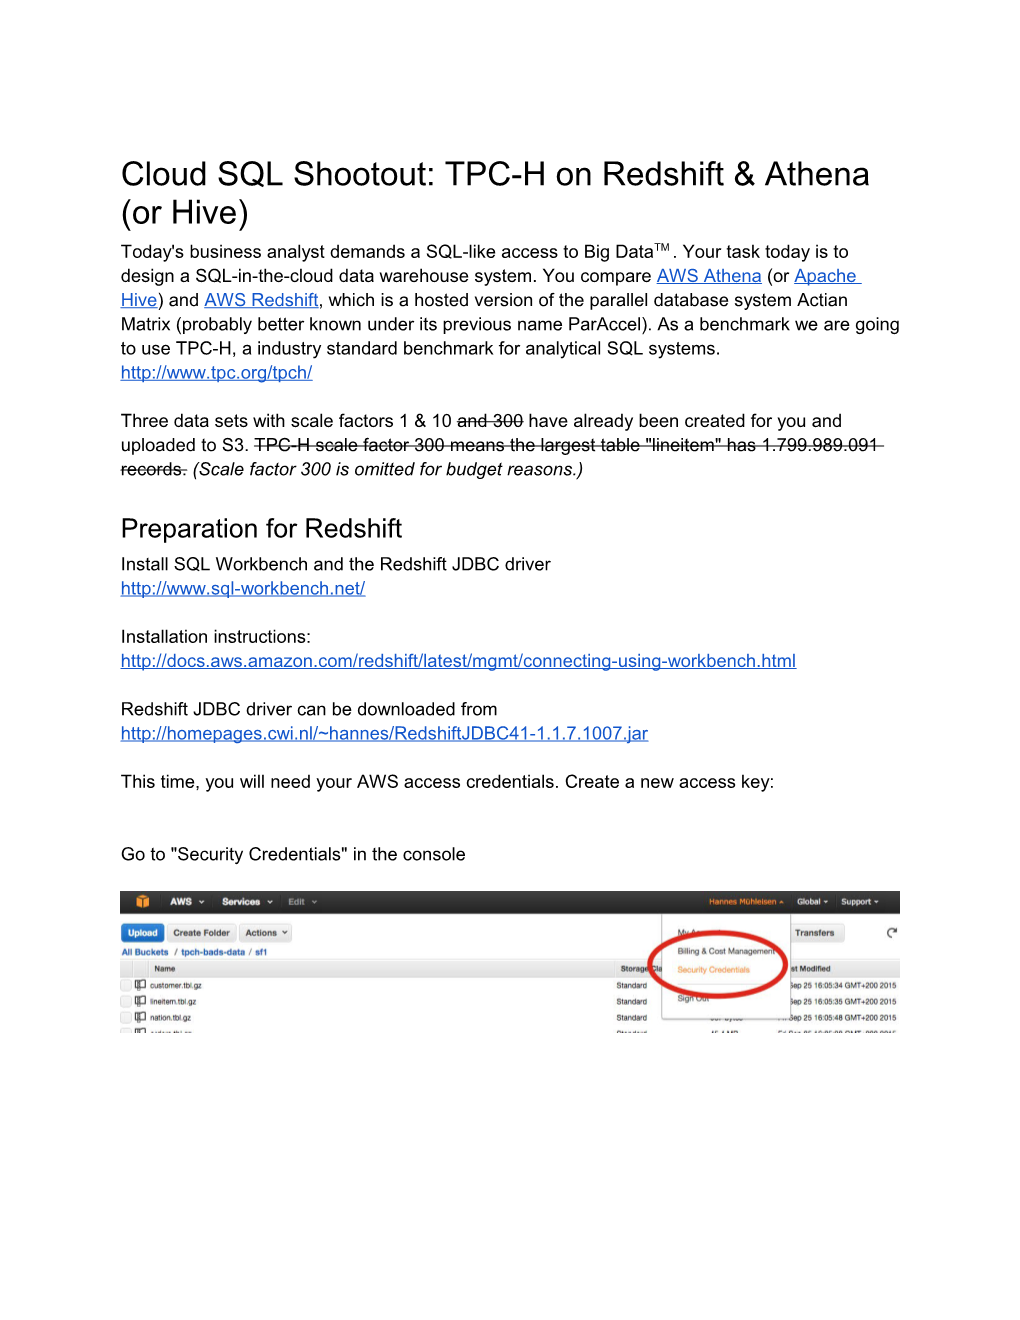 Cloud SQL Shootout: TPC-H on Redshift & Athena (Or Hive)